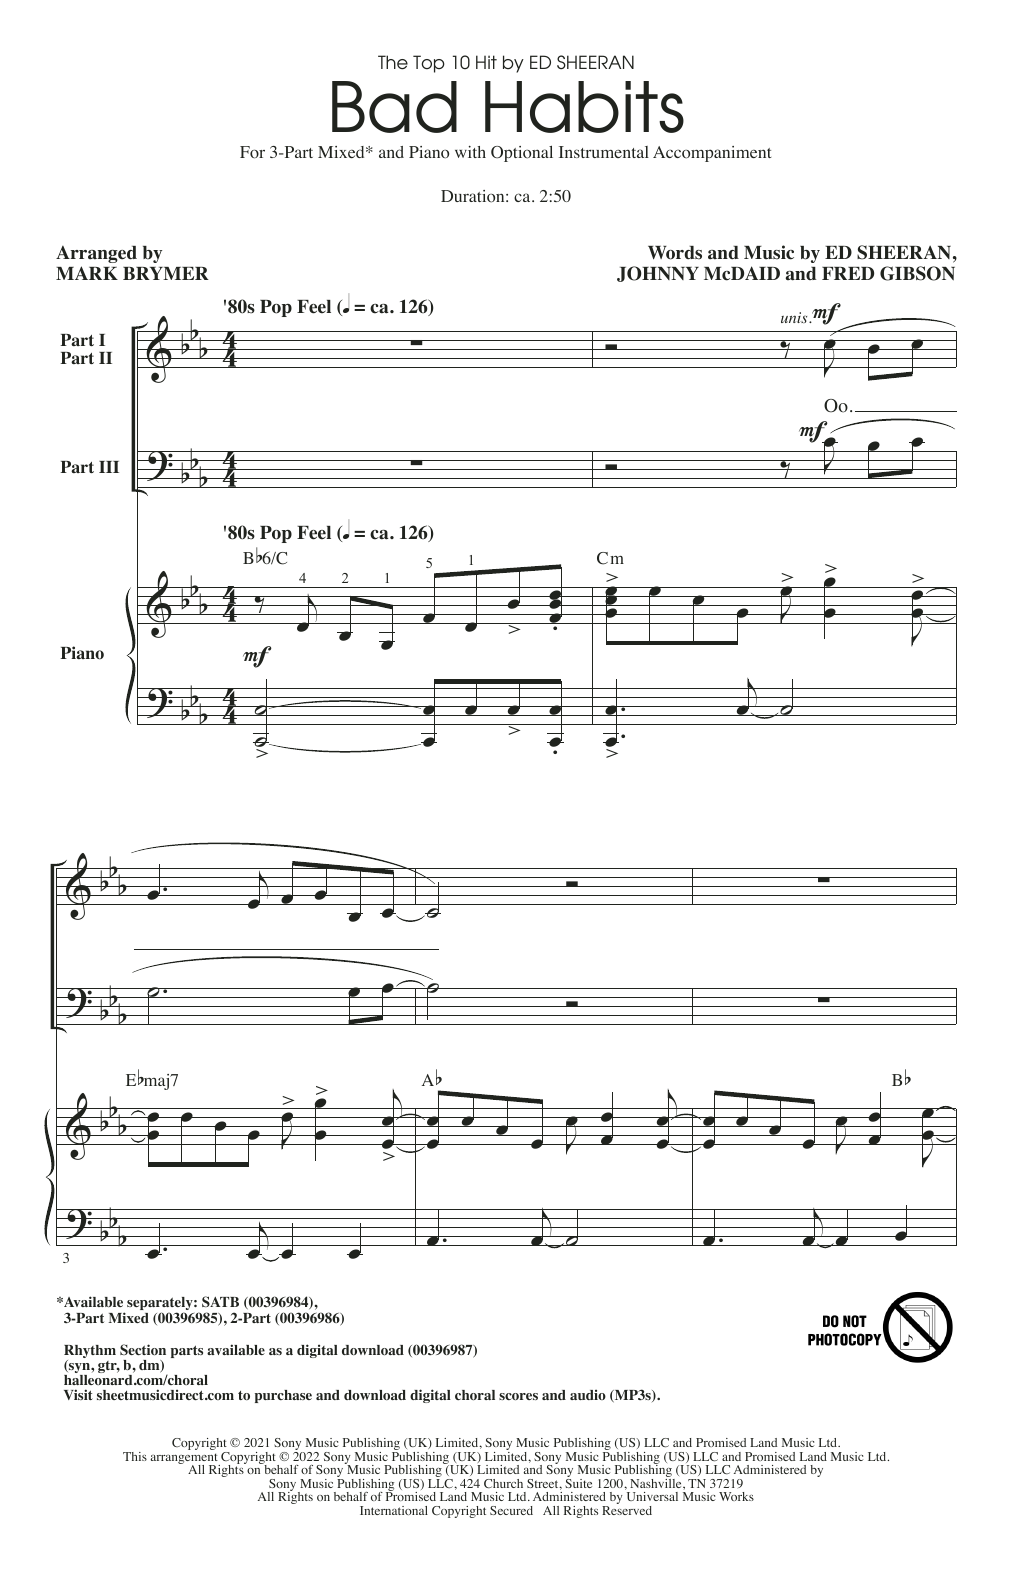 Ed Sheeran Bad Habits (arr. Mark Brymer) Sheet Music Notes & Chords for 3-Part Mixed Choir - Download or Print PDF